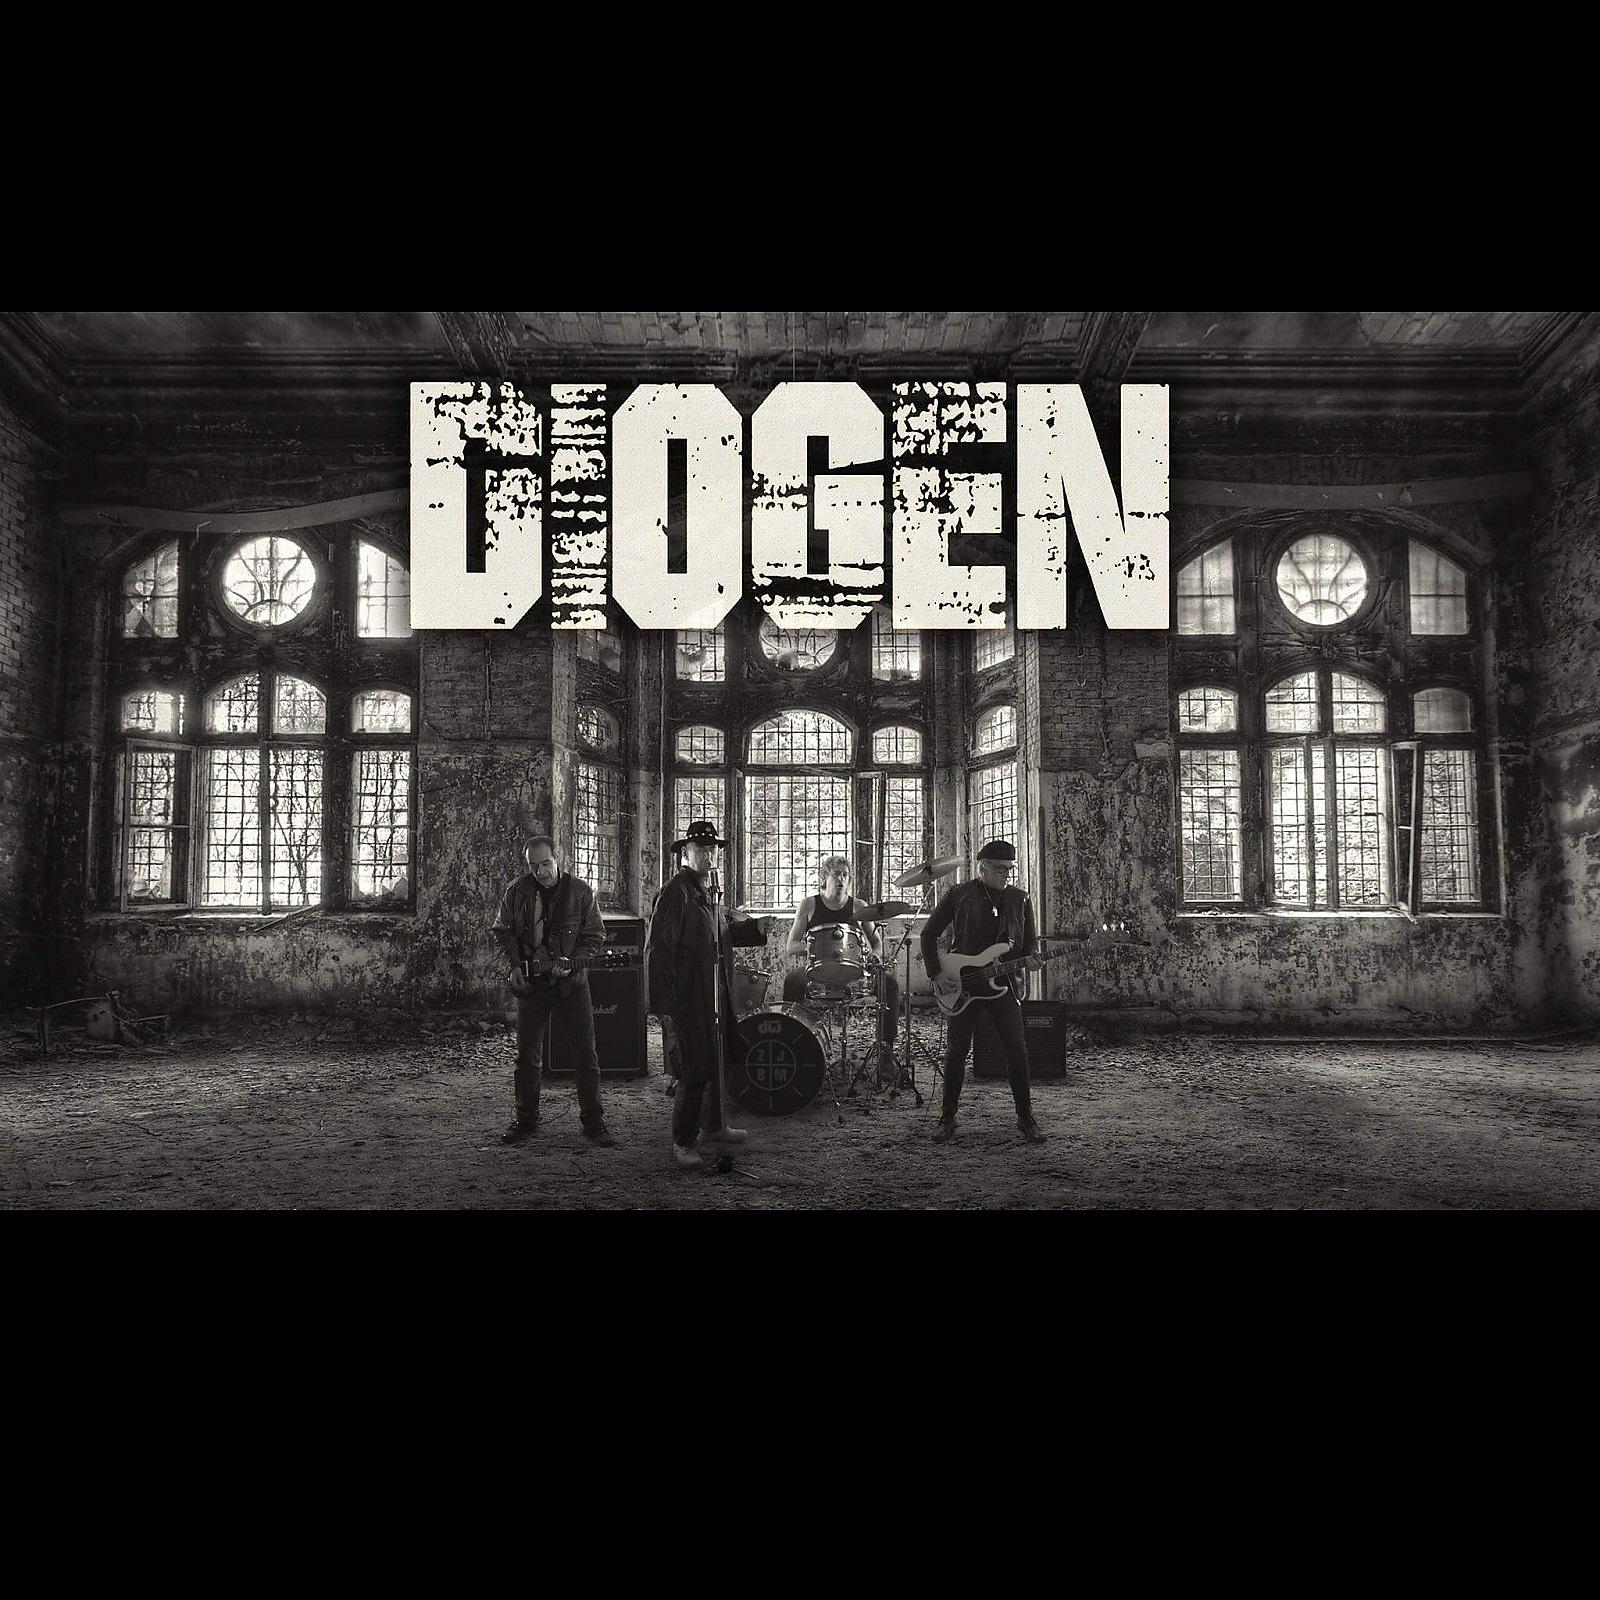 Постер альбома Diogen